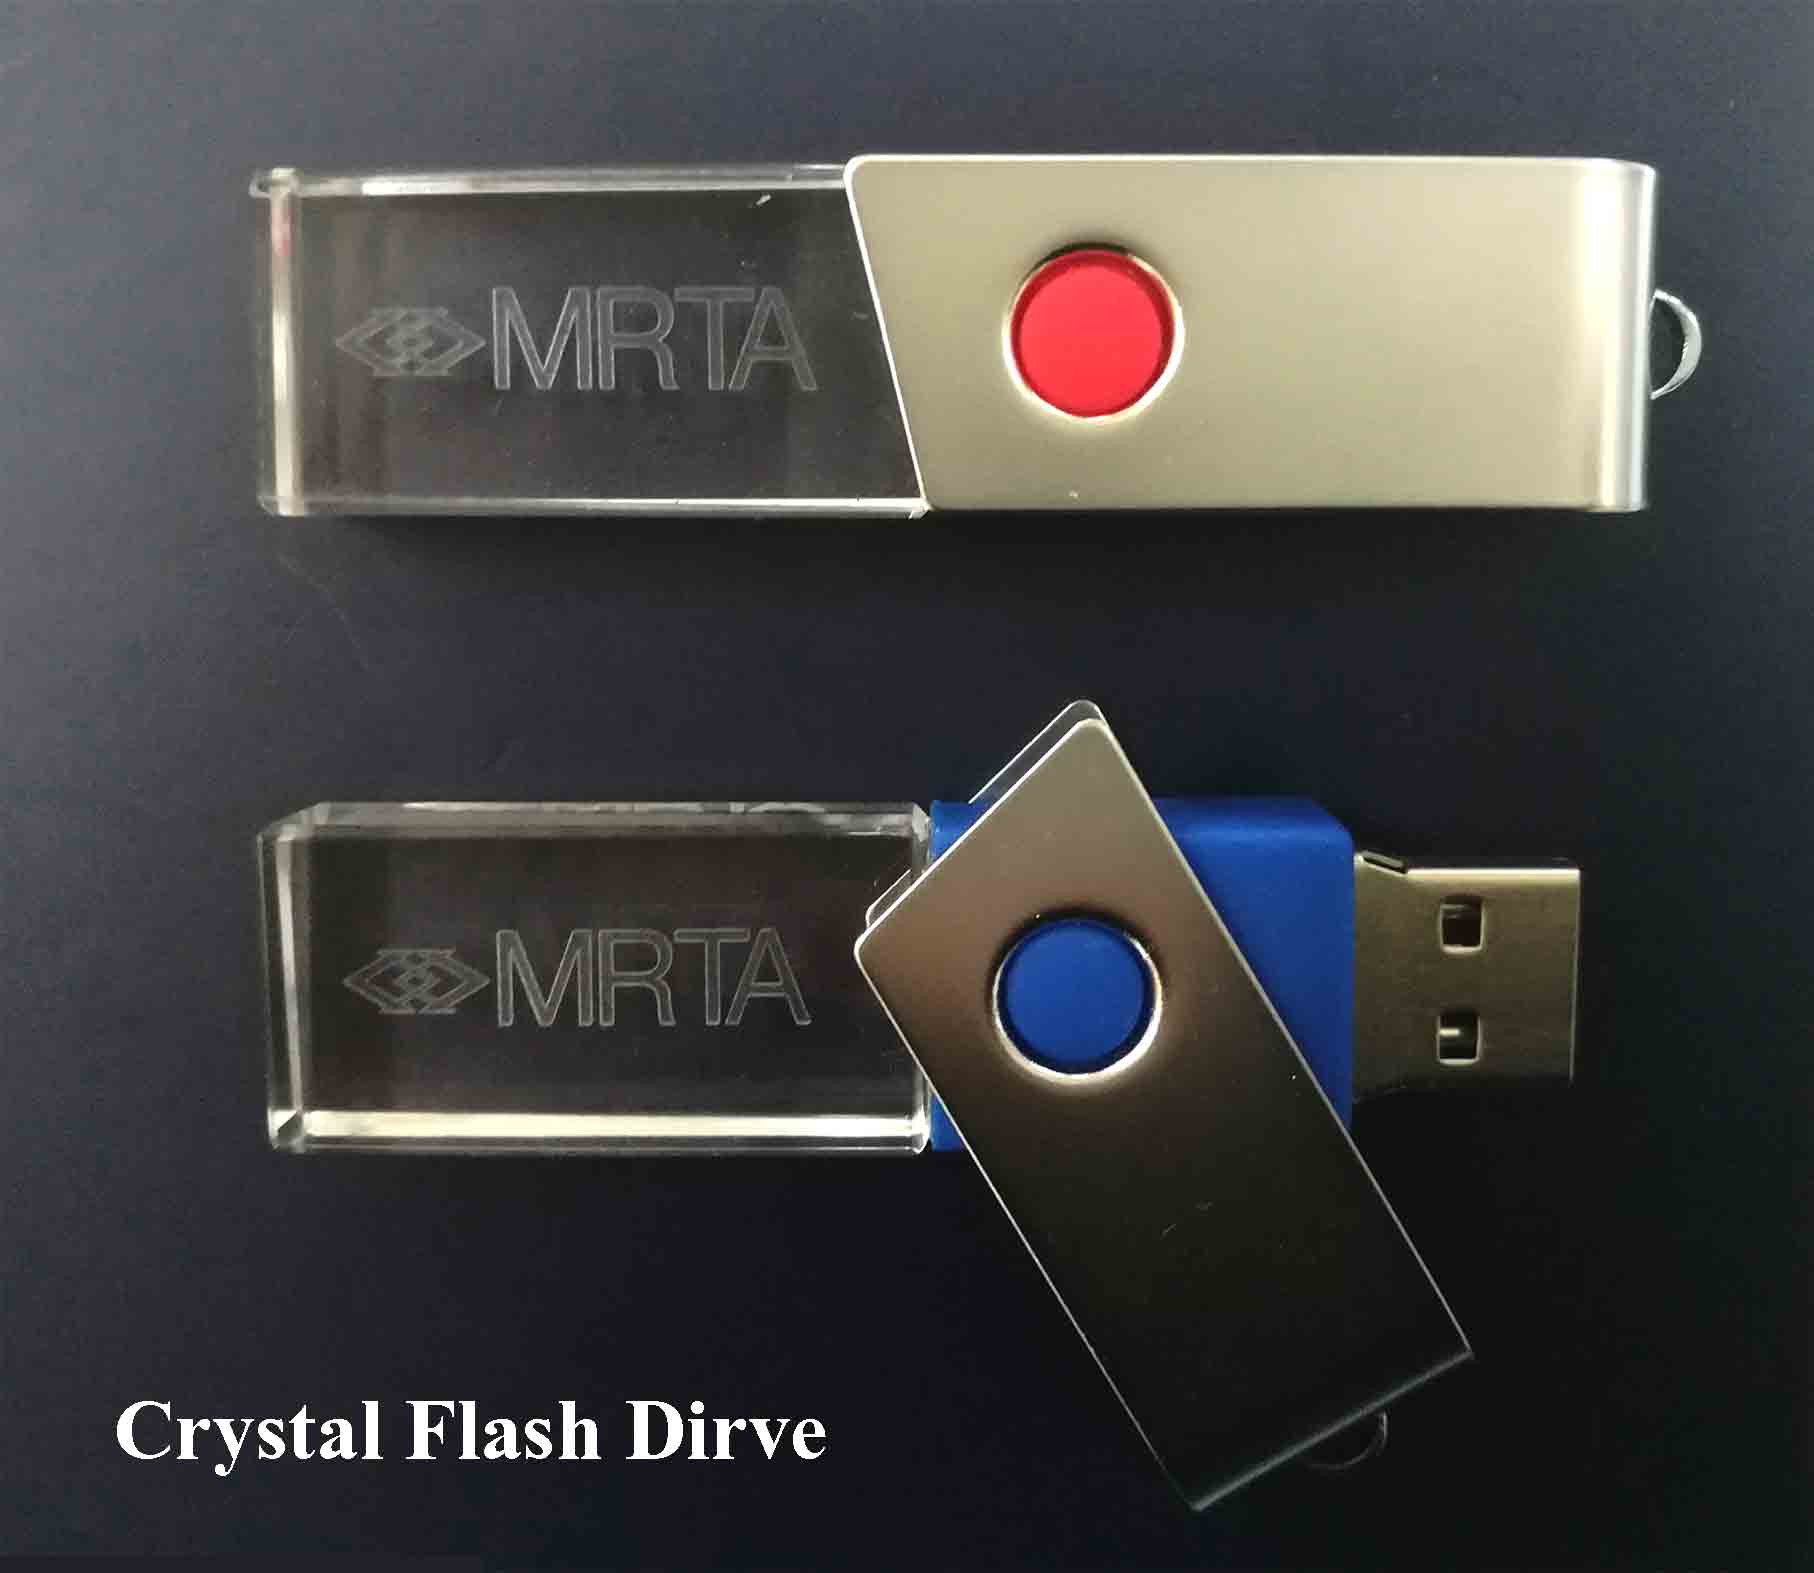 #BRTA Crystal Flash Drive